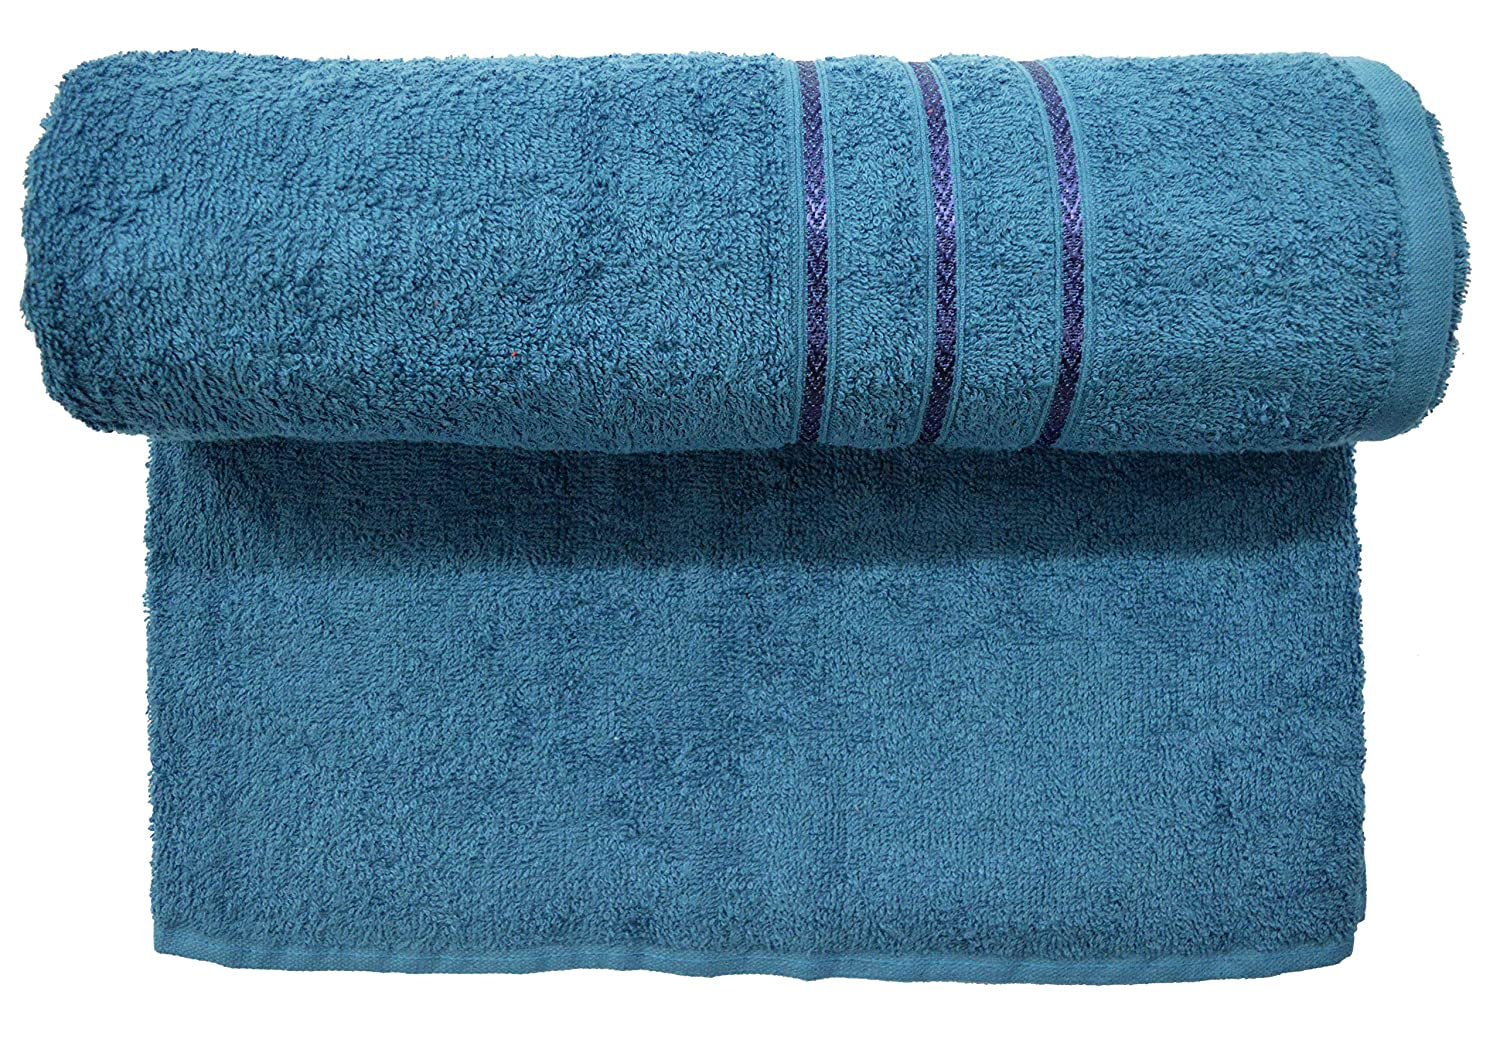 Bombay Dyeing Flora 400 GSM Ink Blue Towel